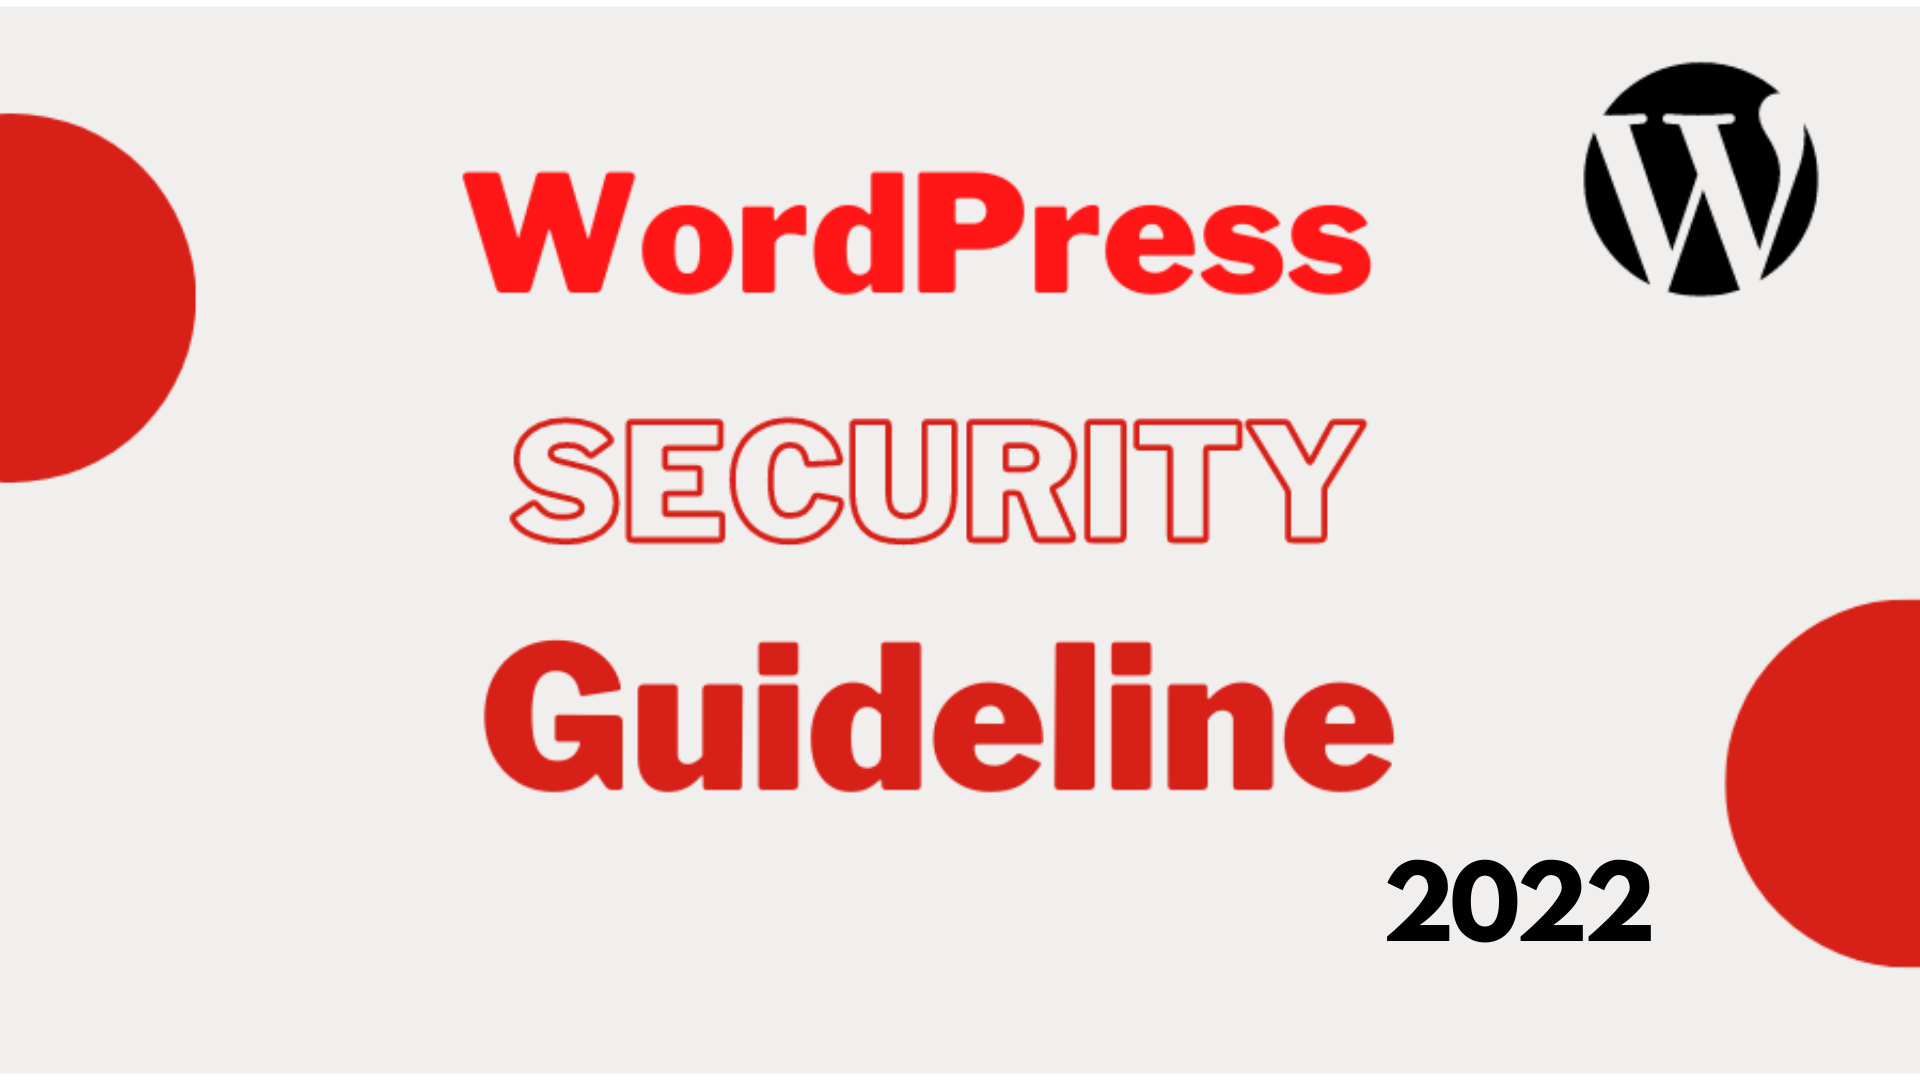 wordpress security